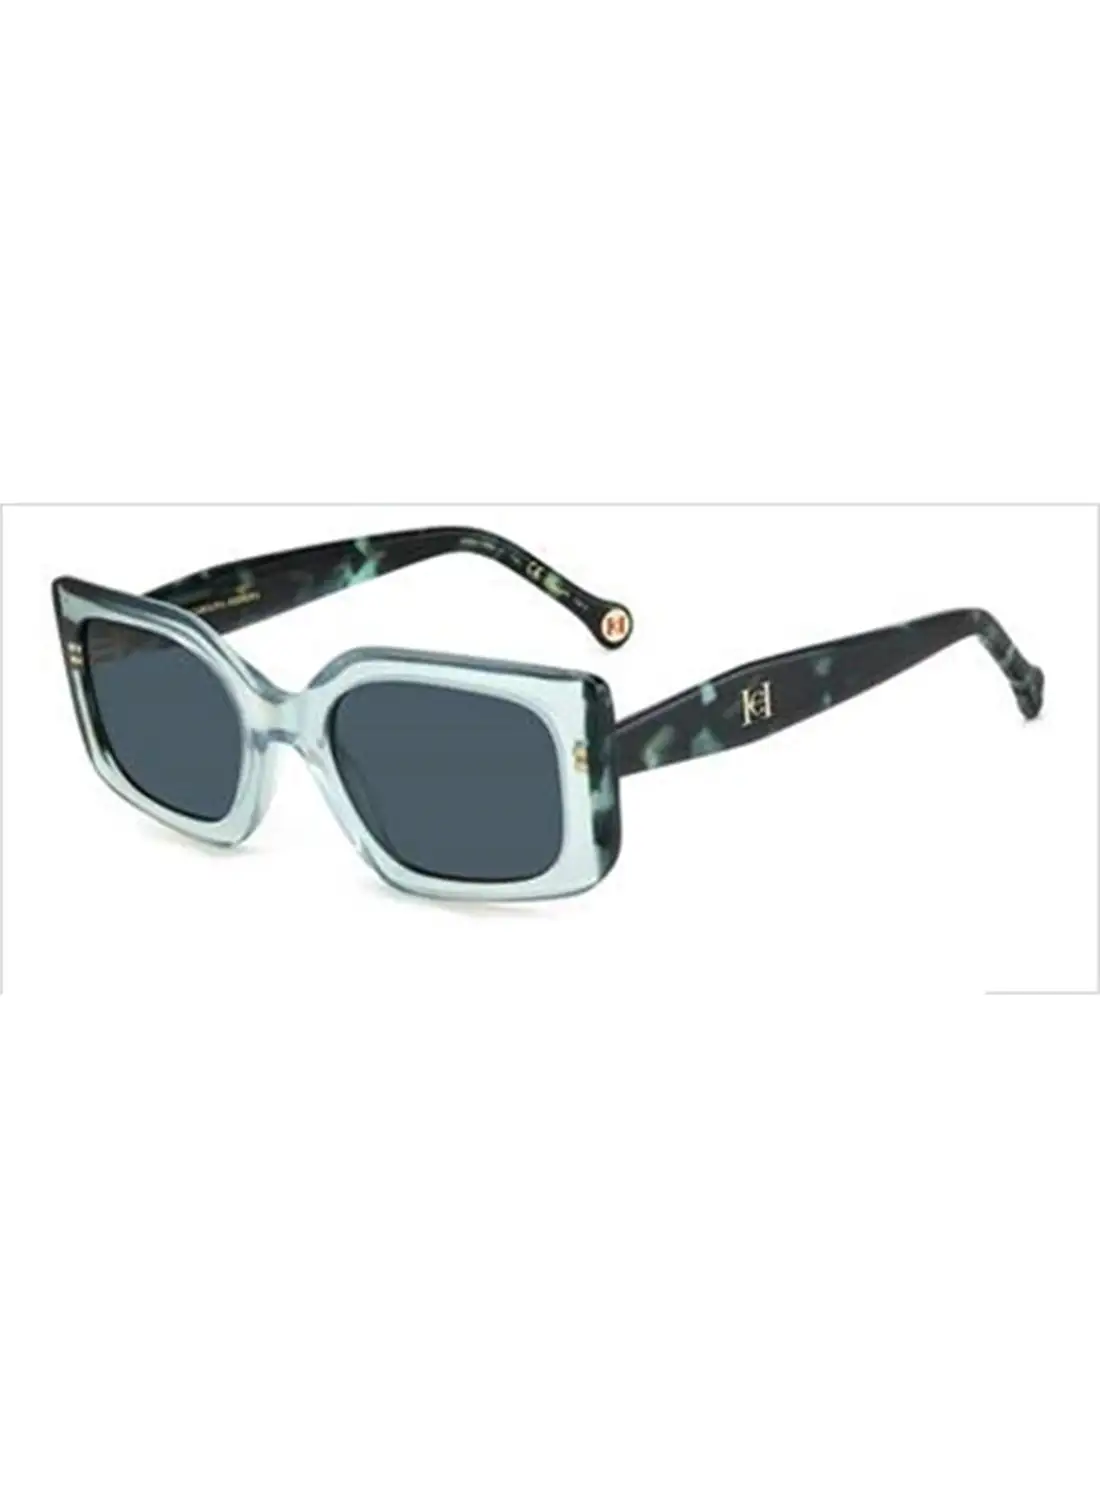 CAROLINA HERRERA Women's UV Protection Rectangular Sunglasses - Her 0182/S Green 22 - Lens Size: 37.6 Mm